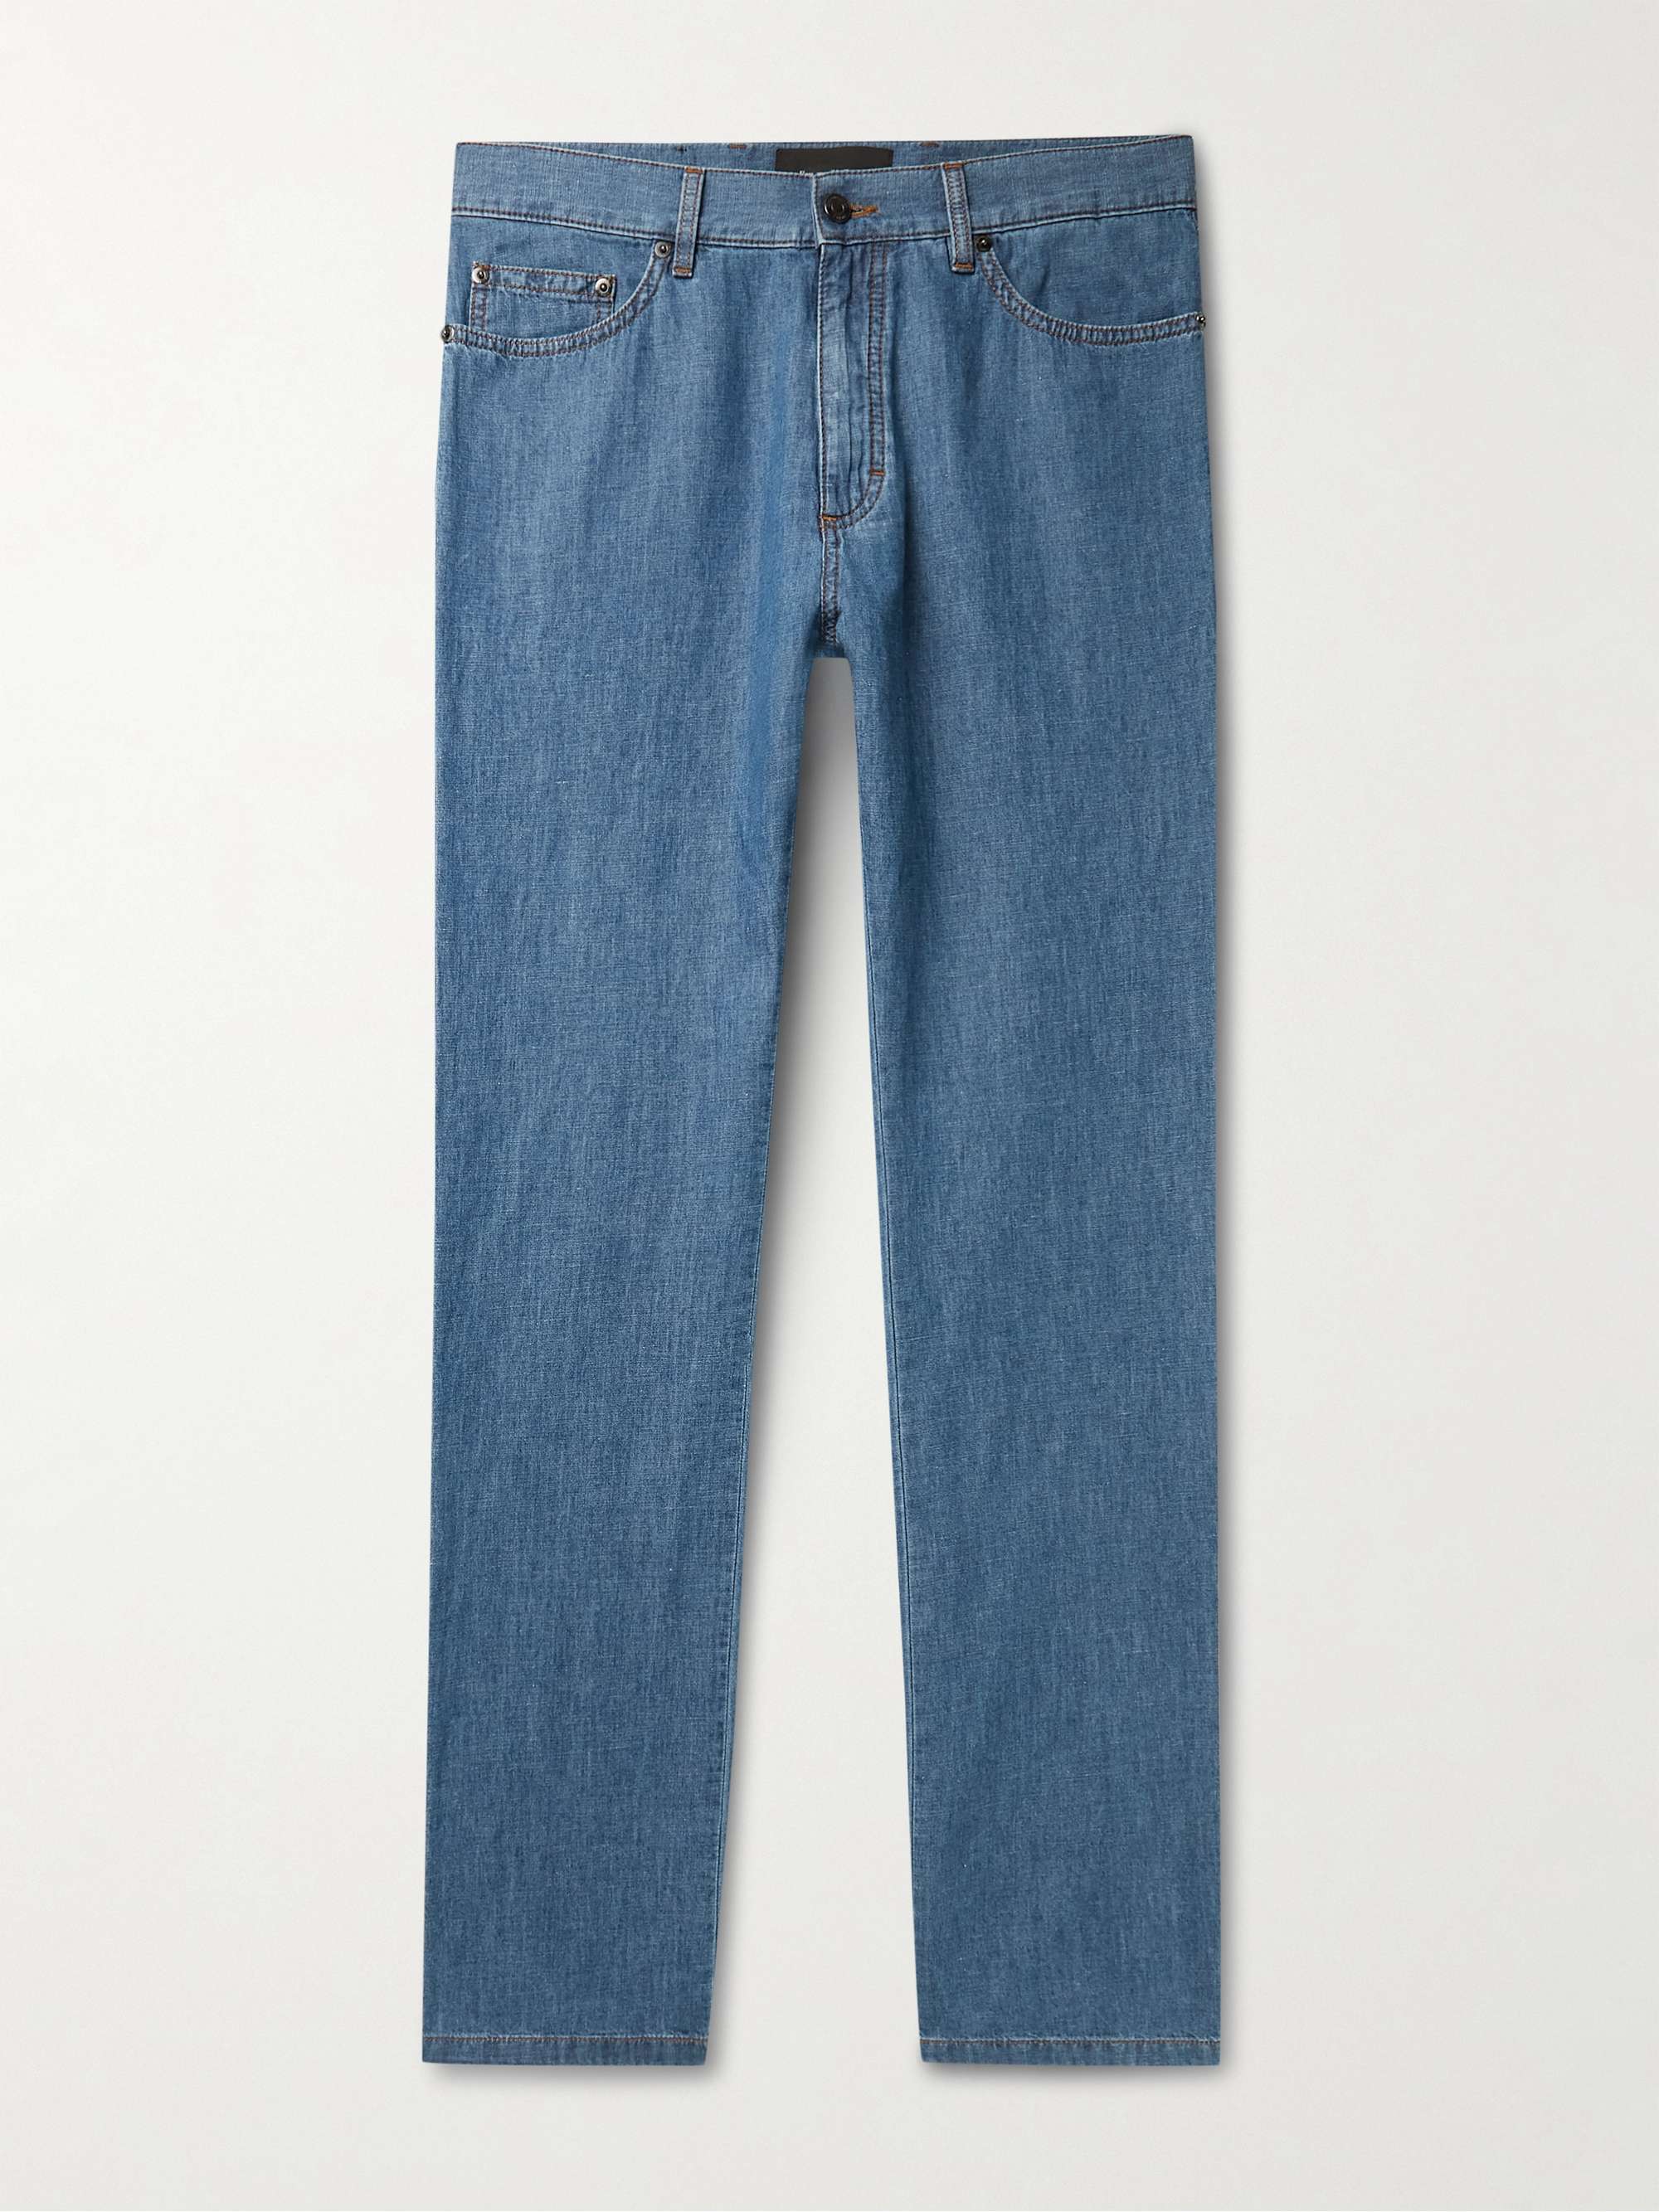 ZEGNA Straight-Leg Stone-Washed Jeans